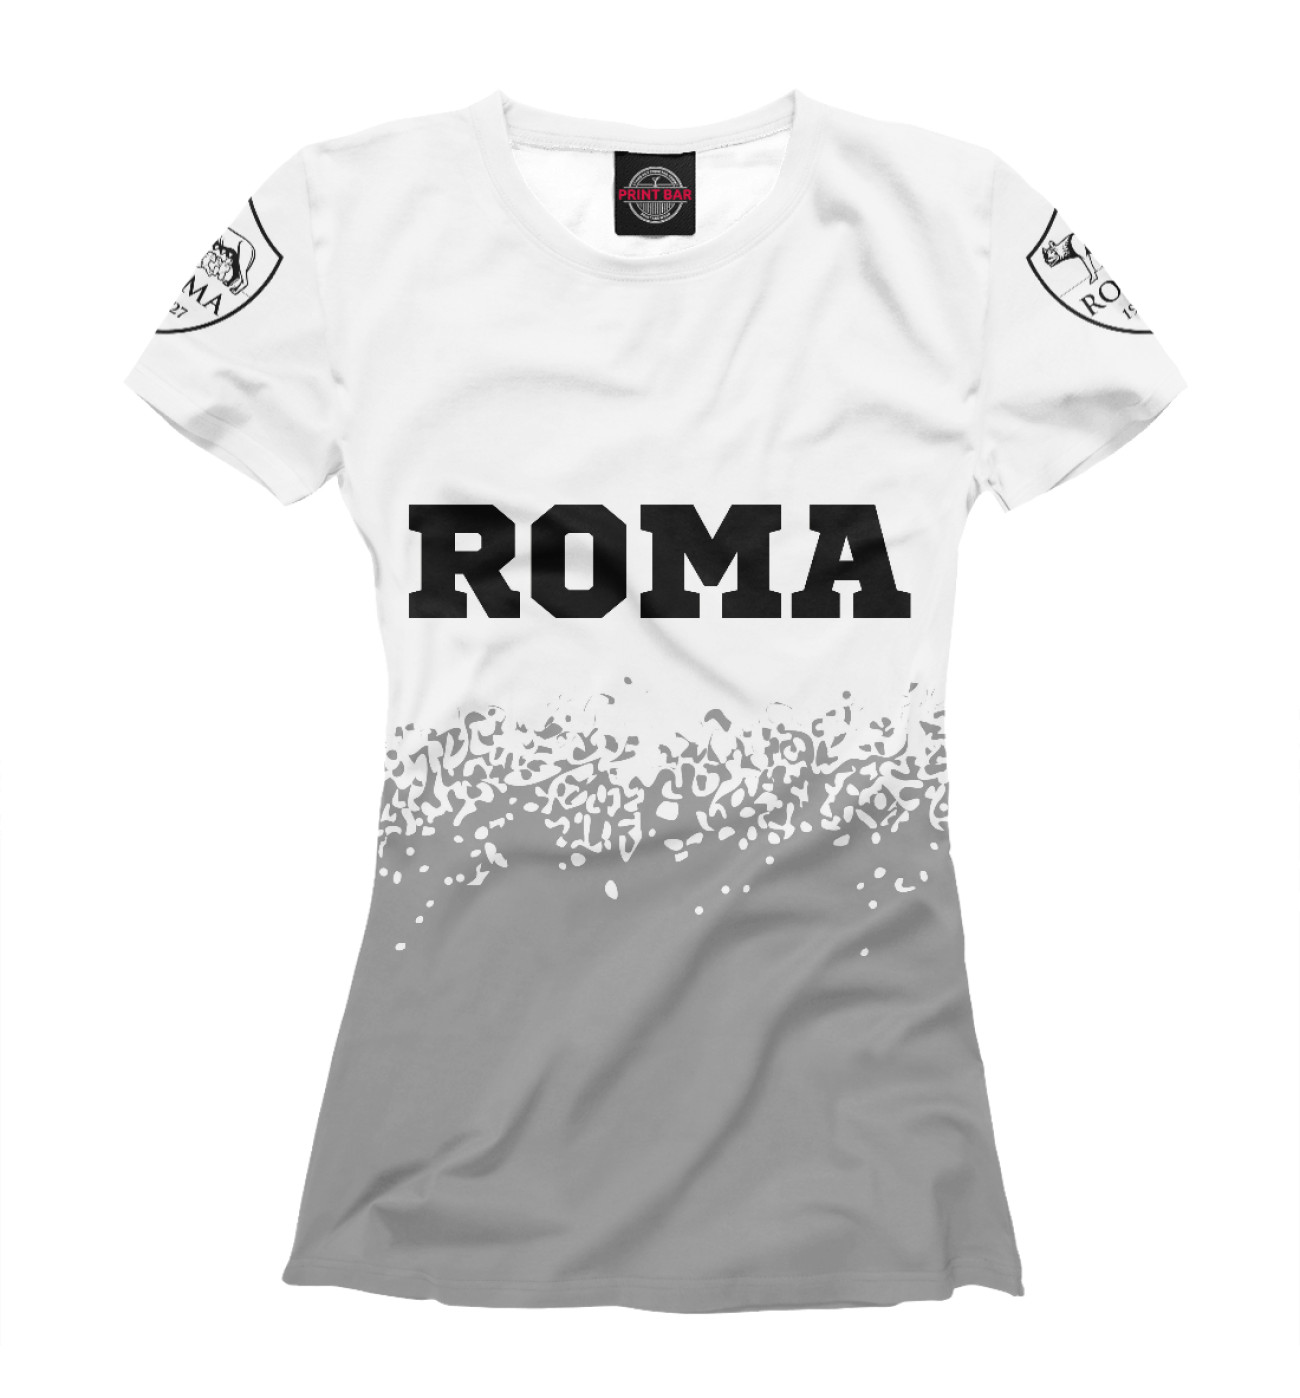 Женская Футболка Roma Sport Light, артикул: RMA-418594-fut-1